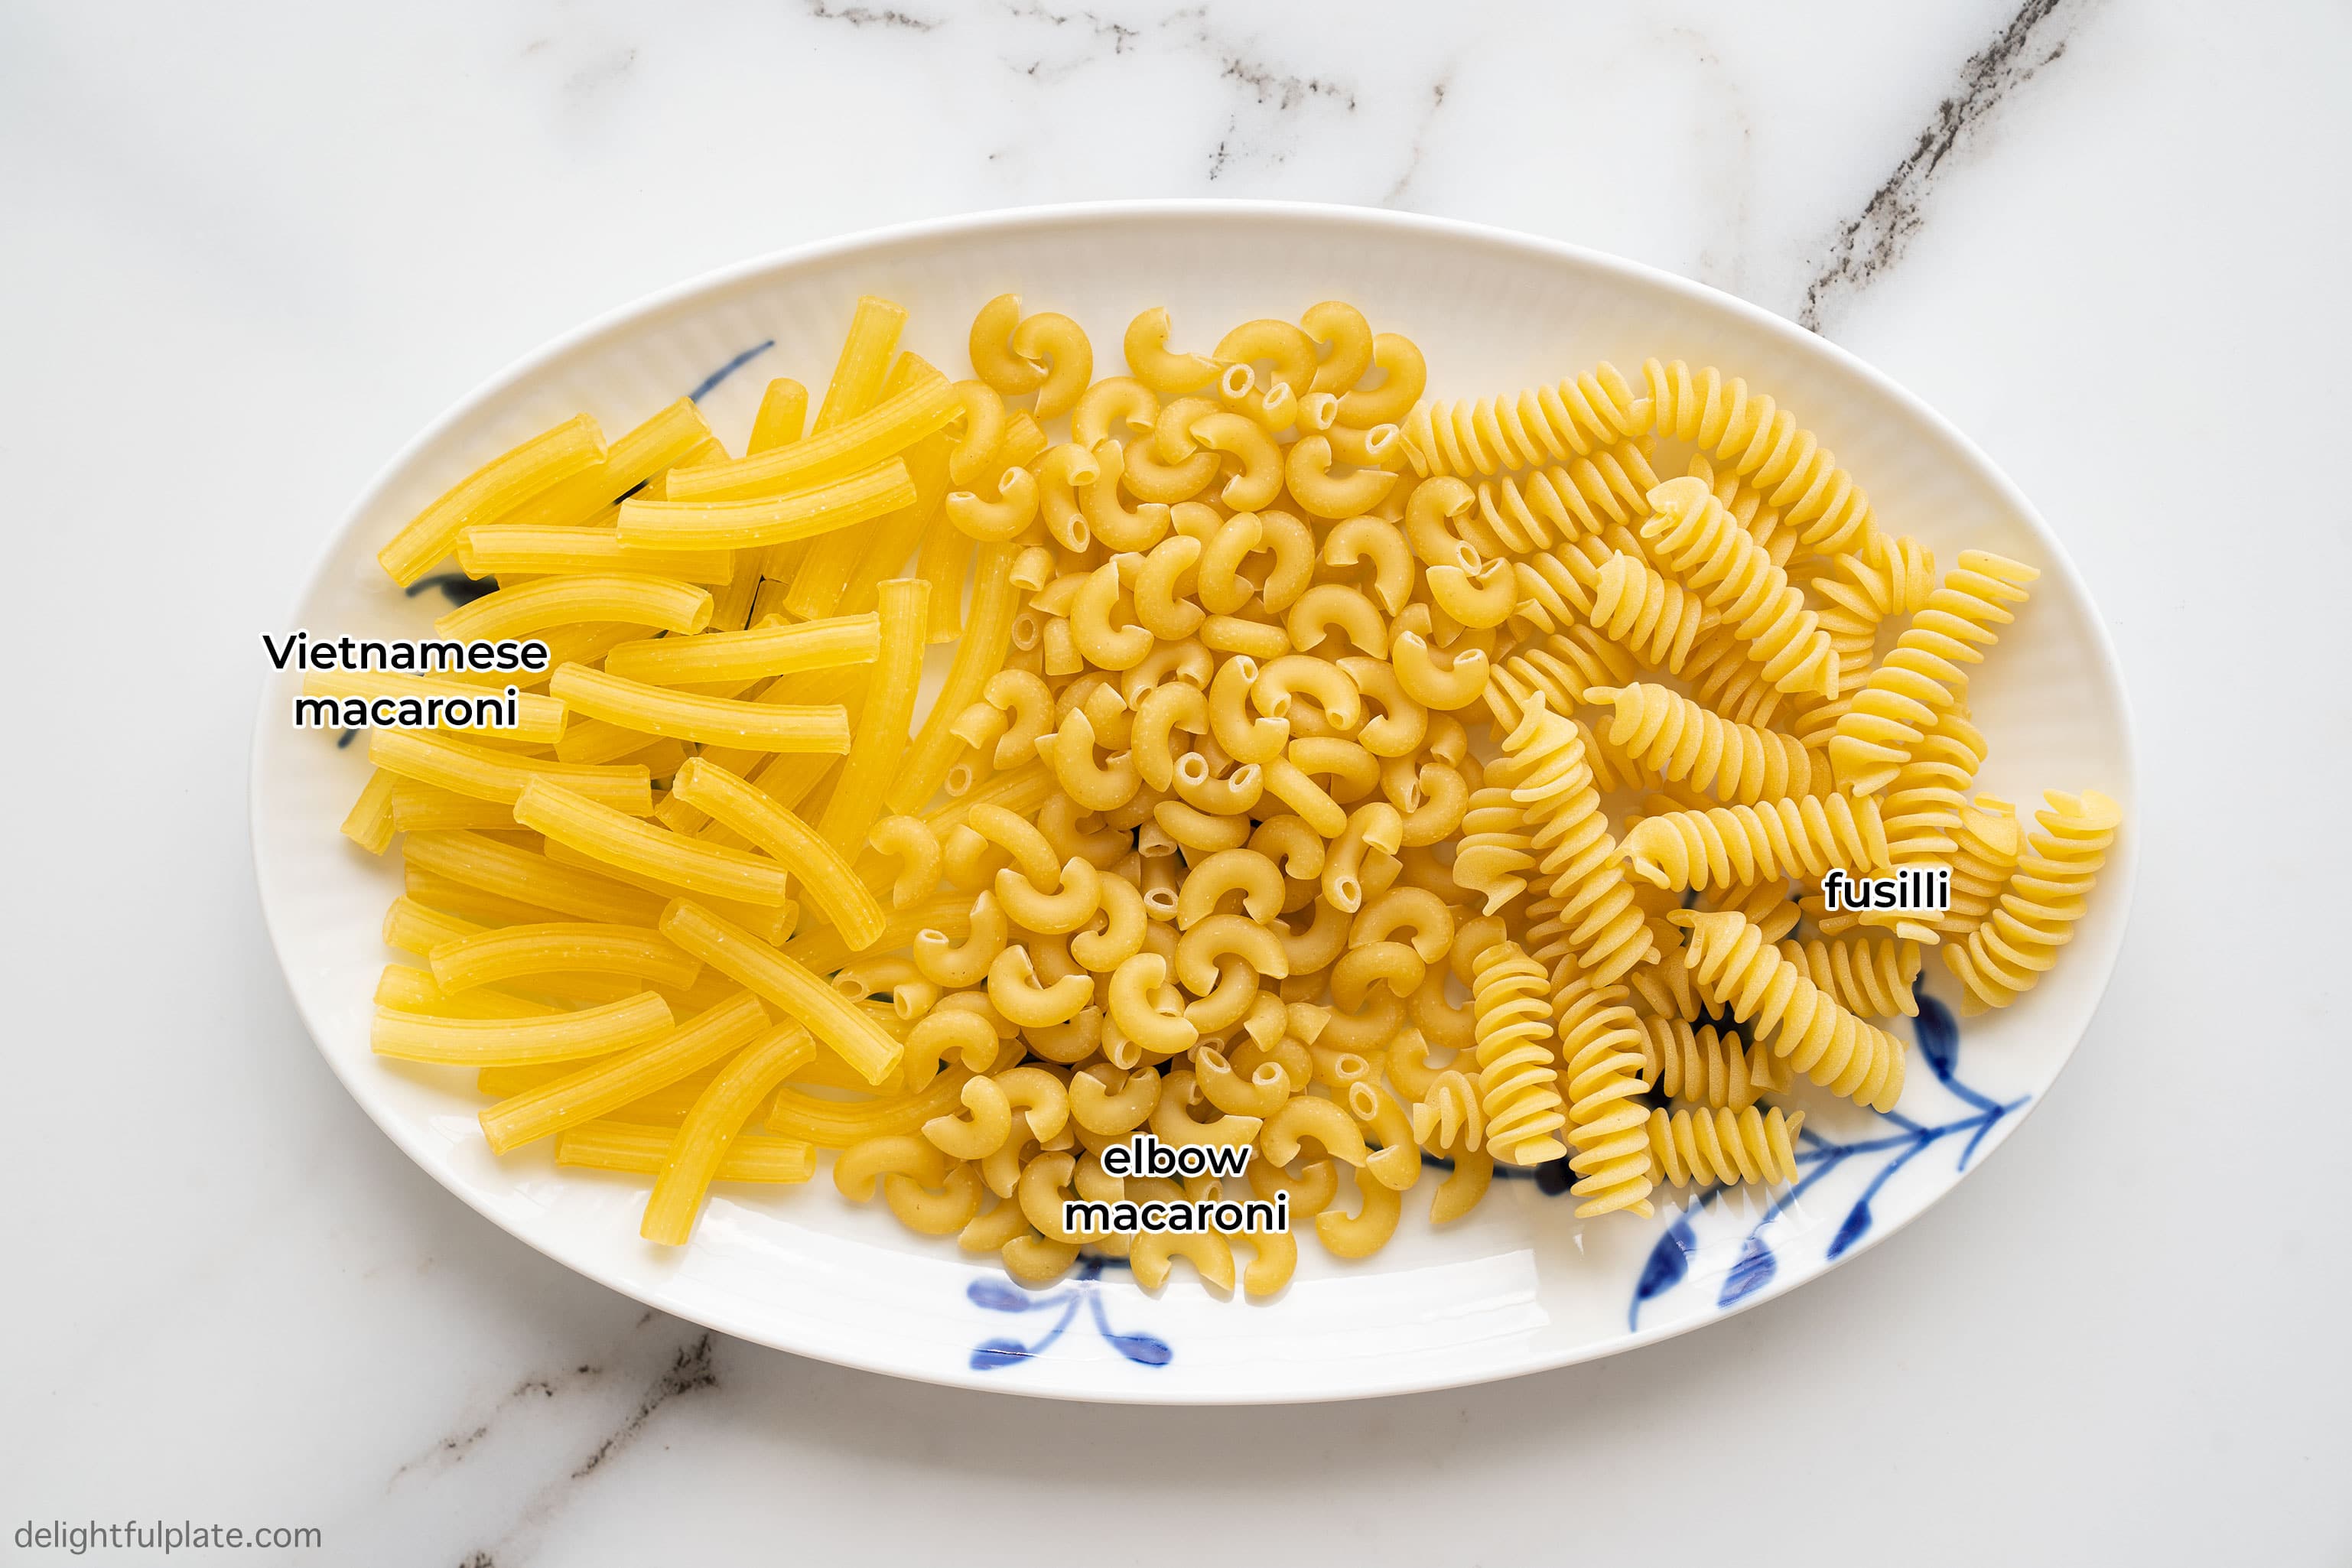 a plate with 3 types of pasta: Vietnamese macaroni, elbow macaroni and fusilli